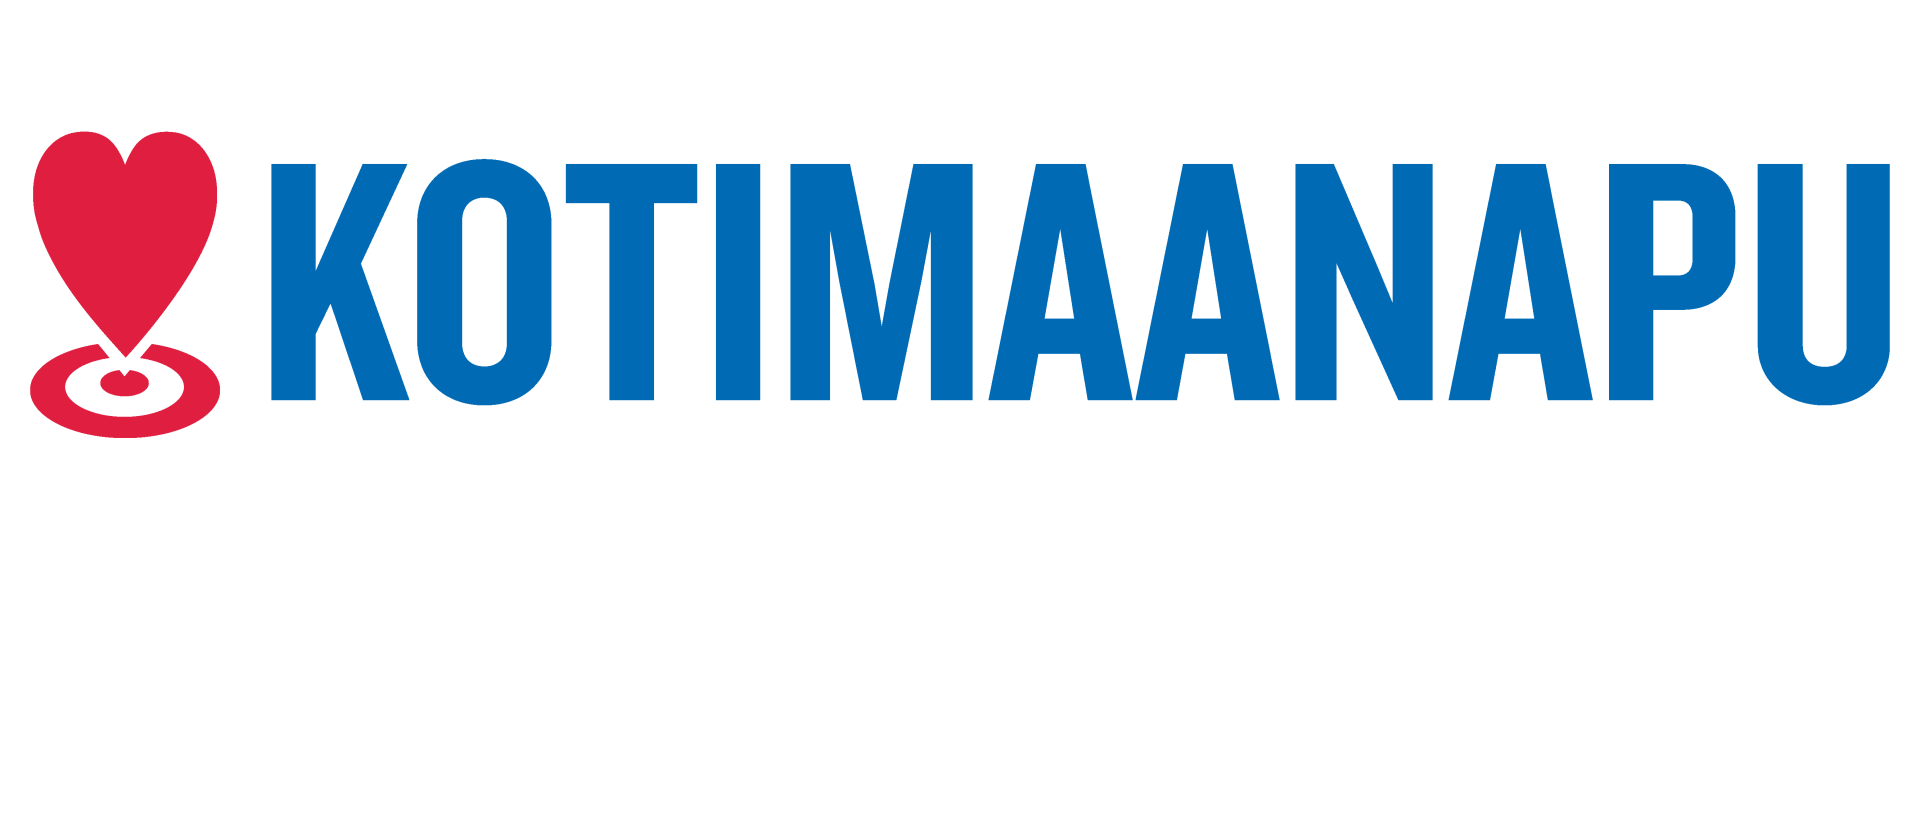 Kotimaanapu.fi:n logo